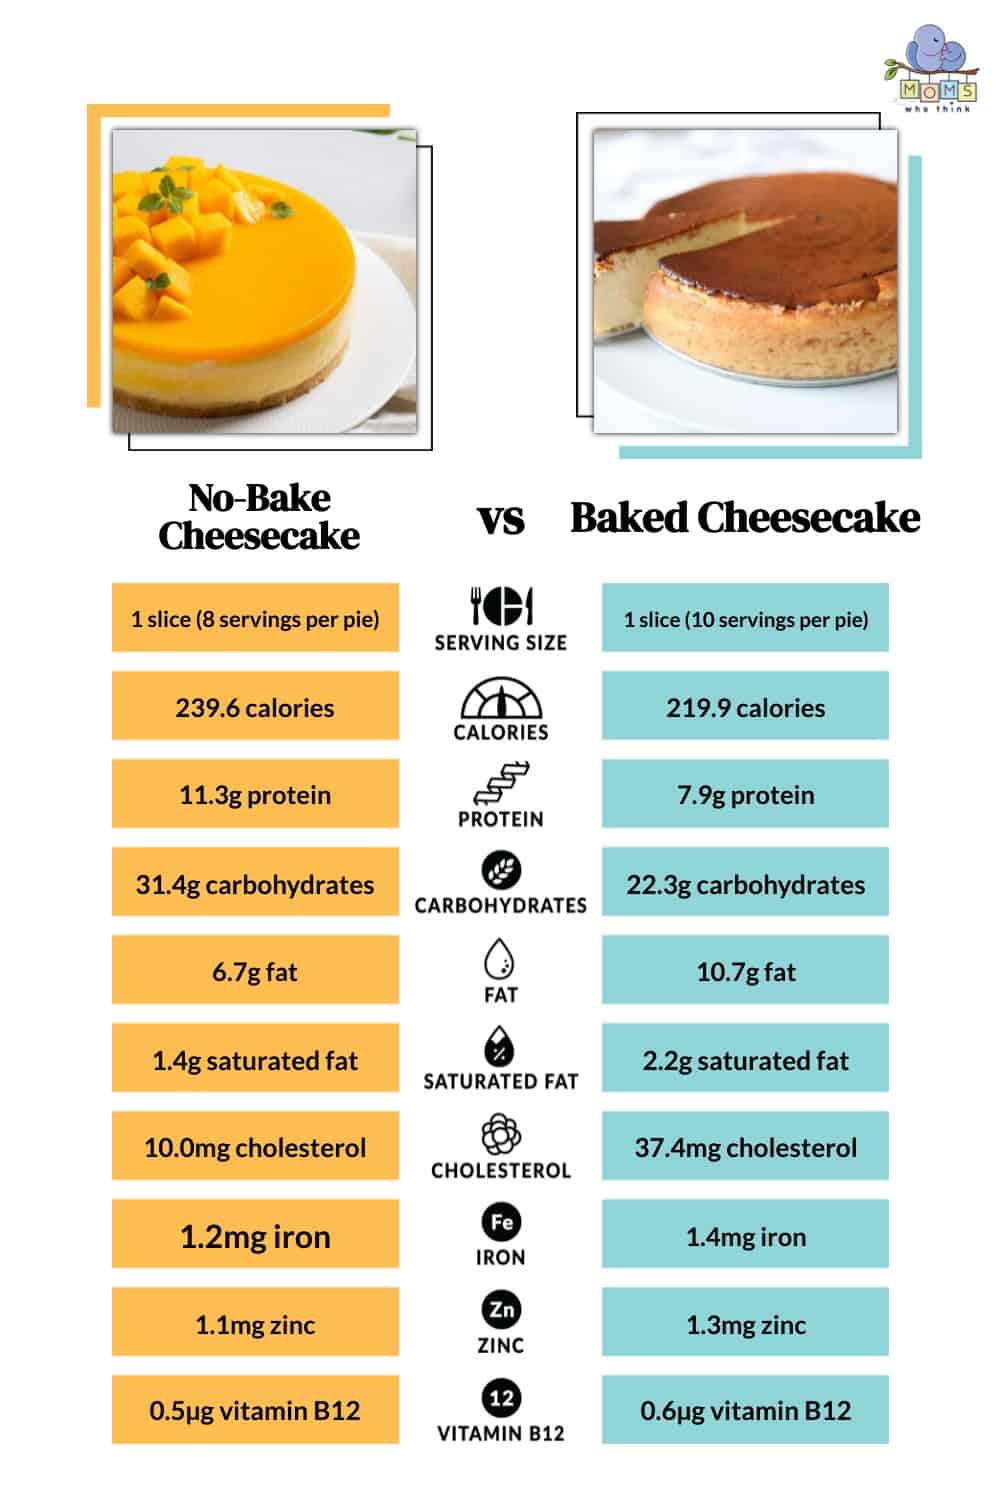 No-Bake Cheesecake vs Baked Cheesecake Nutrition Comparison